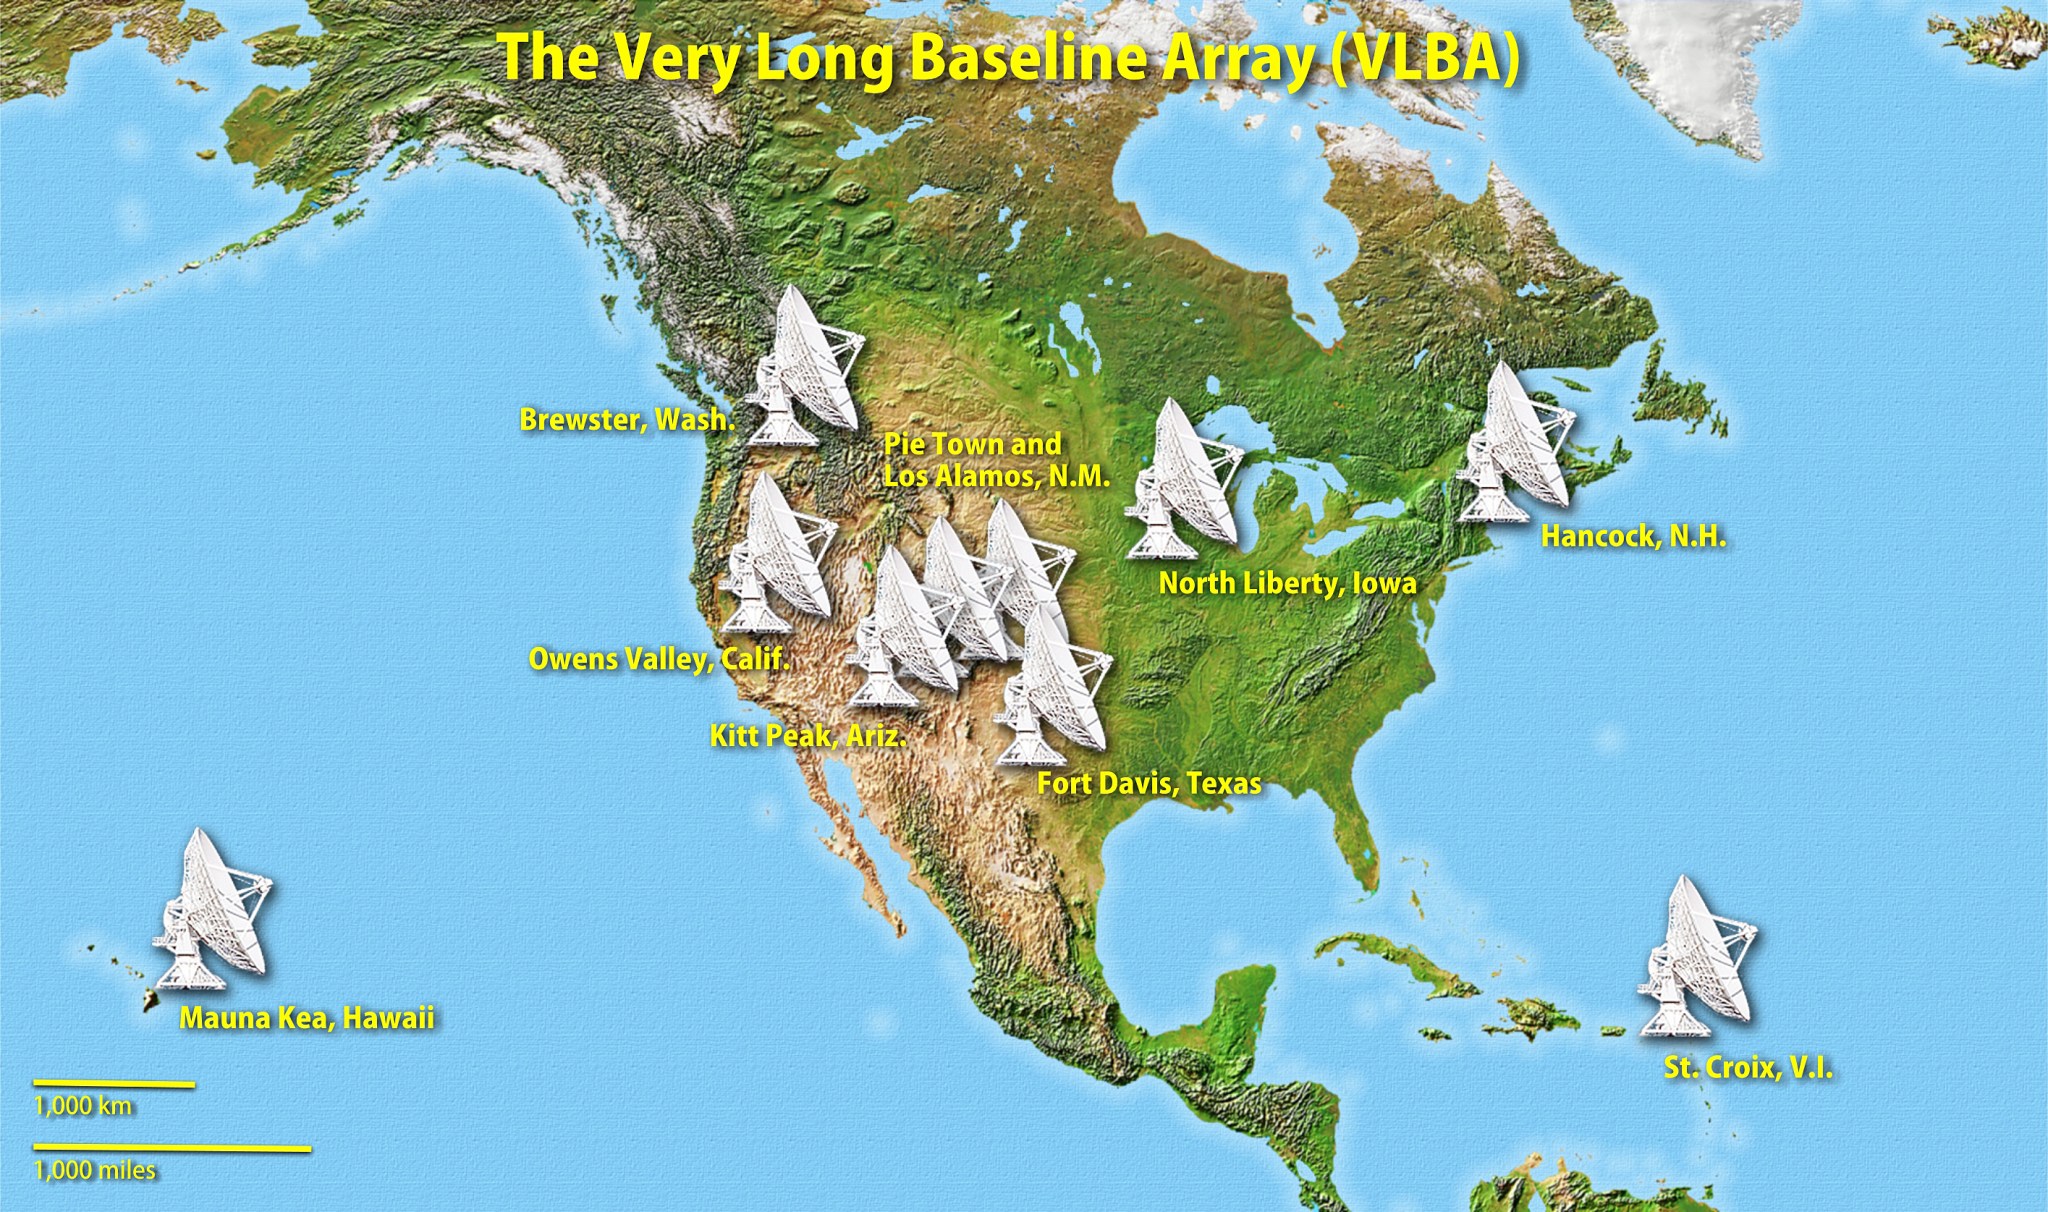 VLBA map